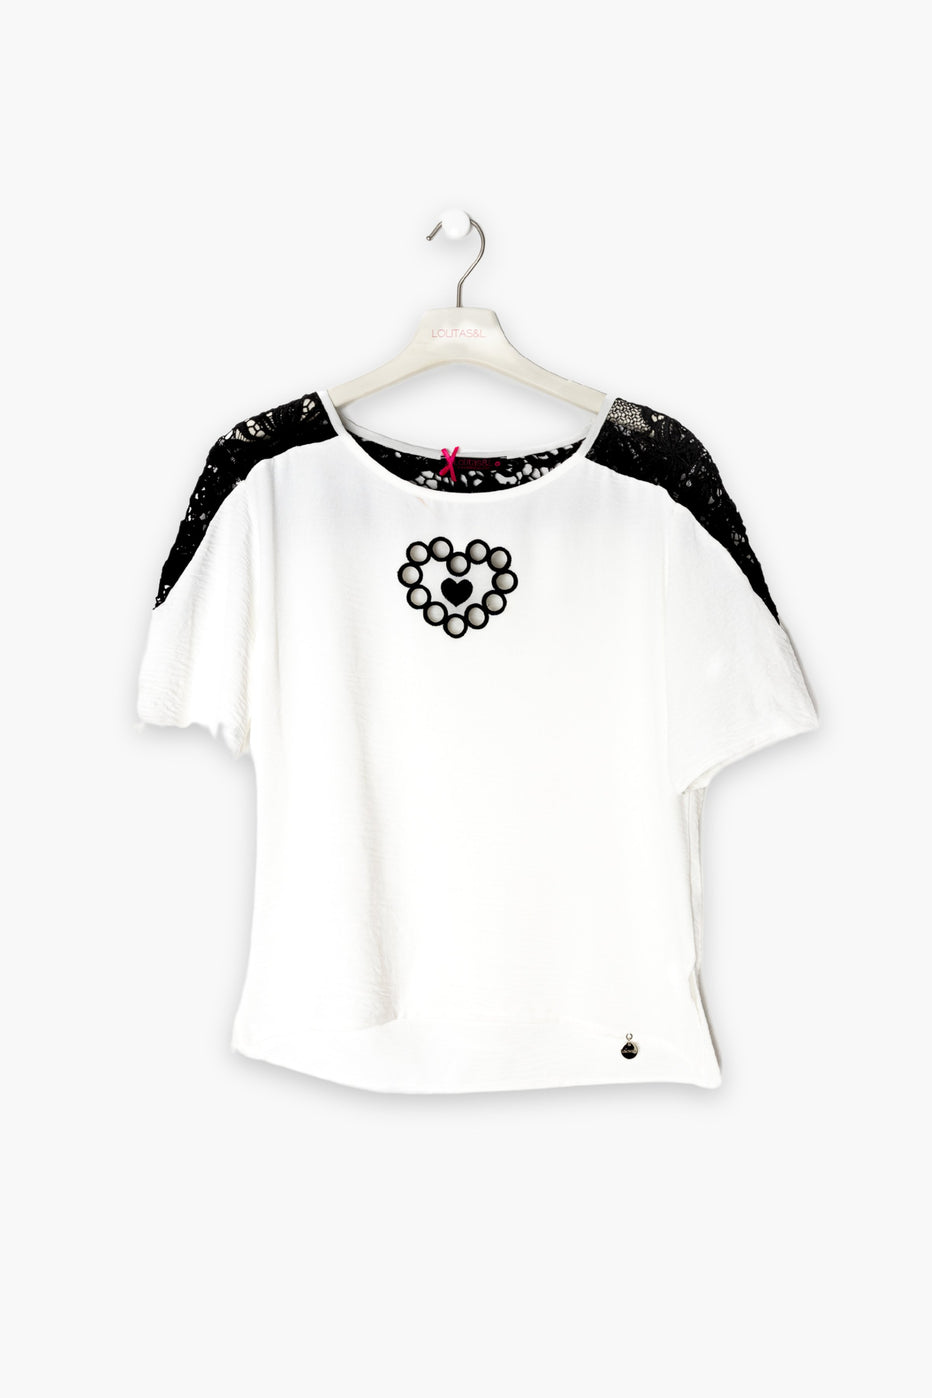 Camiseta blanca corazon bordado con grogre contraste negro LolitasyL - lolitasyl.com